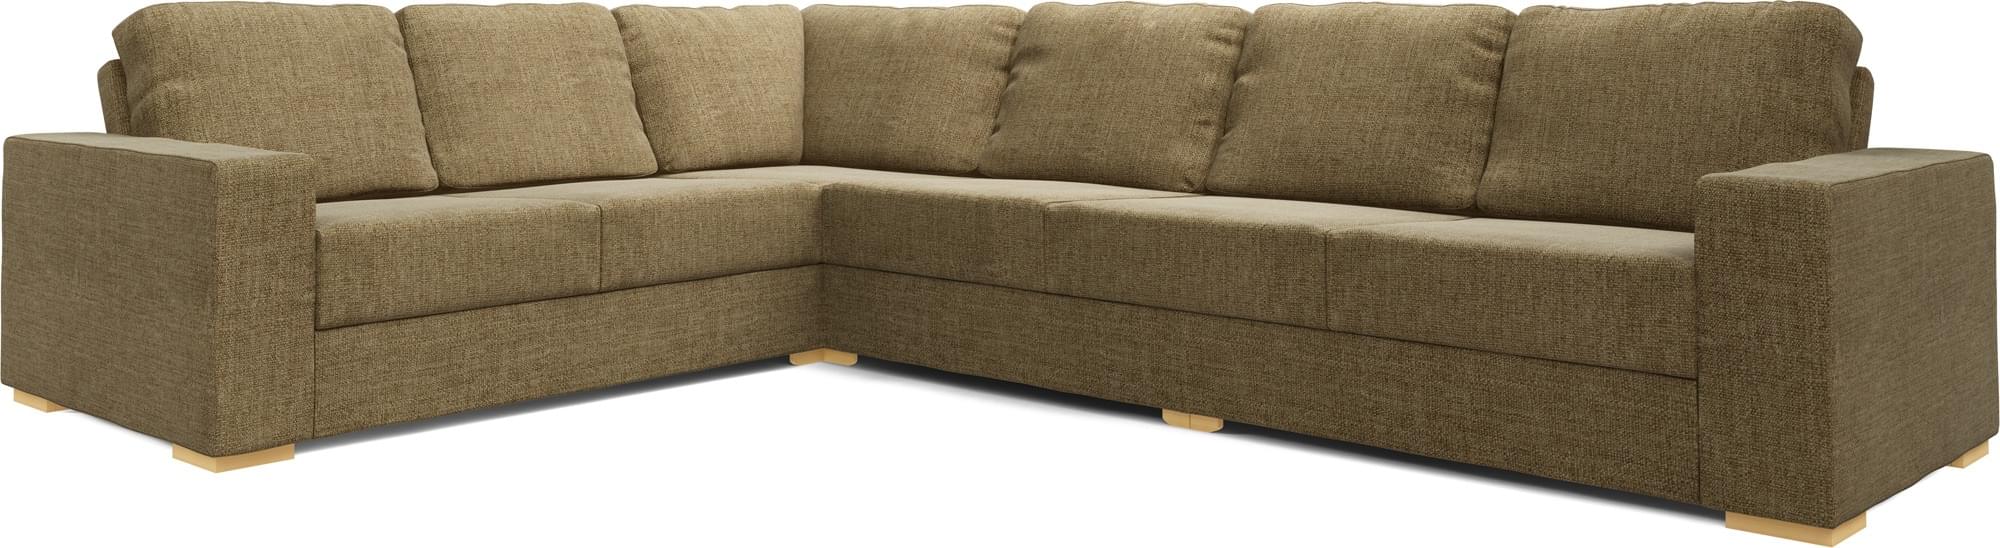 Sker 4X3 Corner Sofa